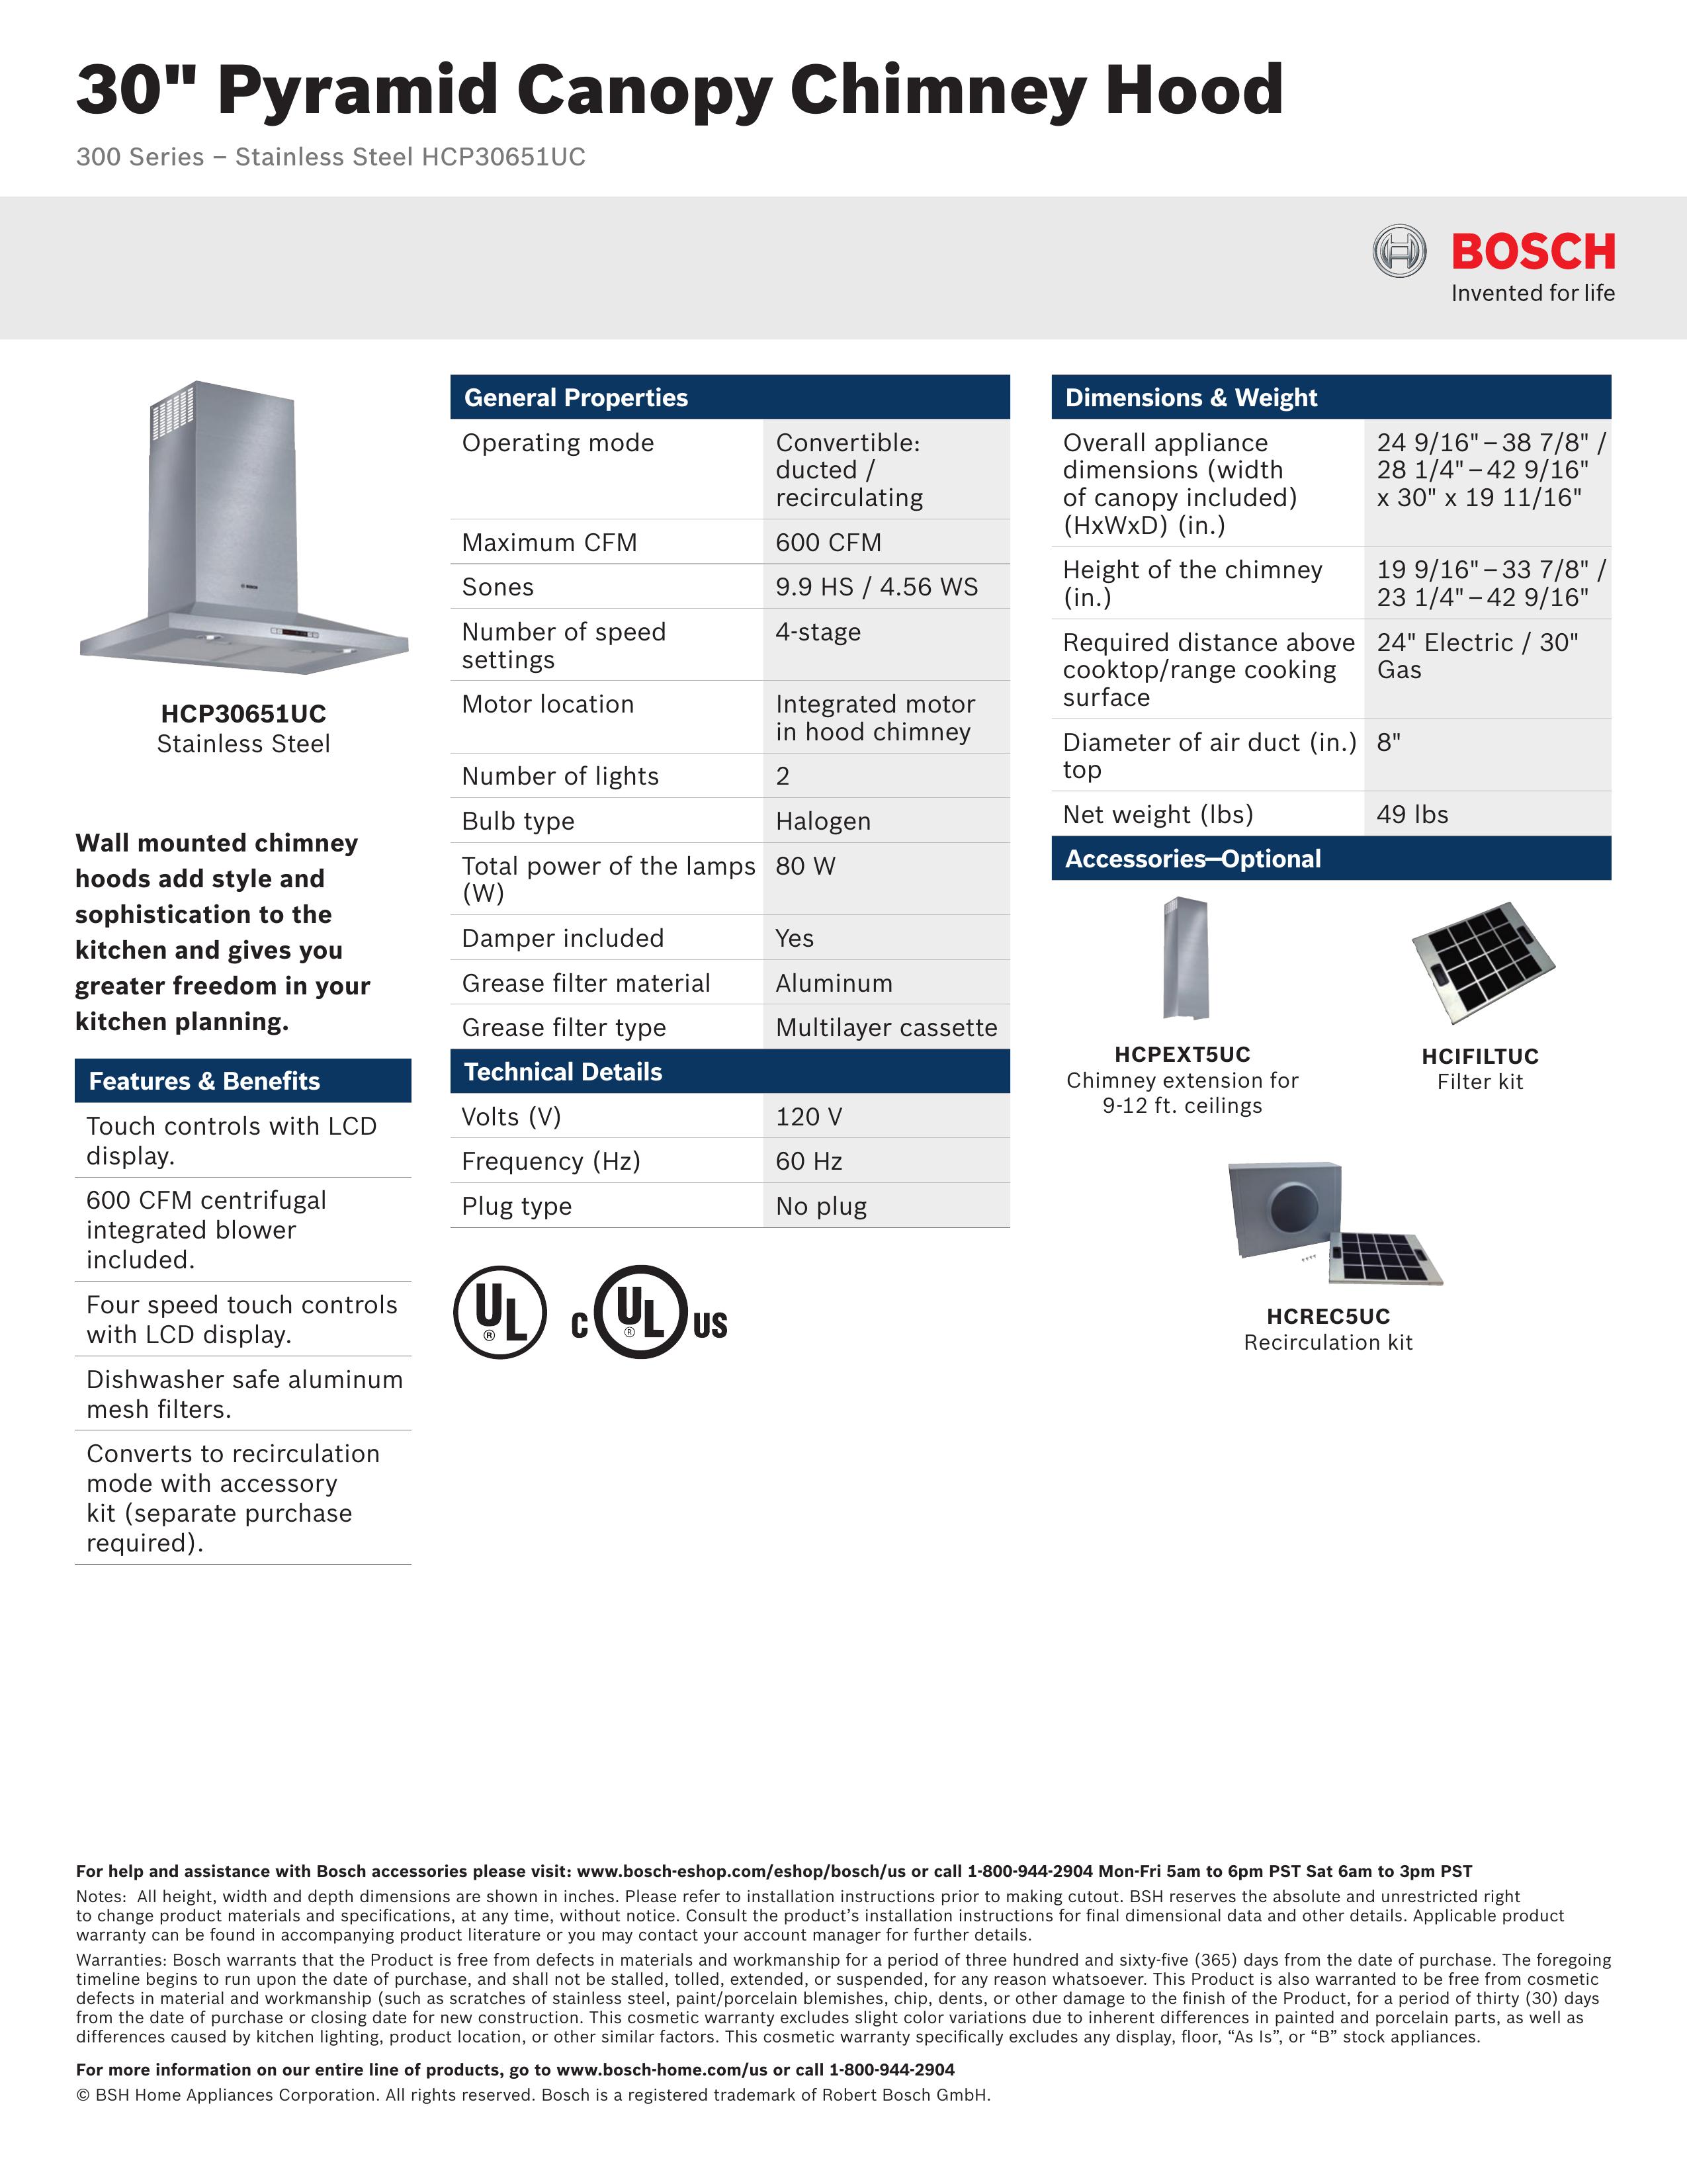 Bosch Appliances HCP30651UC Ventilation Hood User Manual